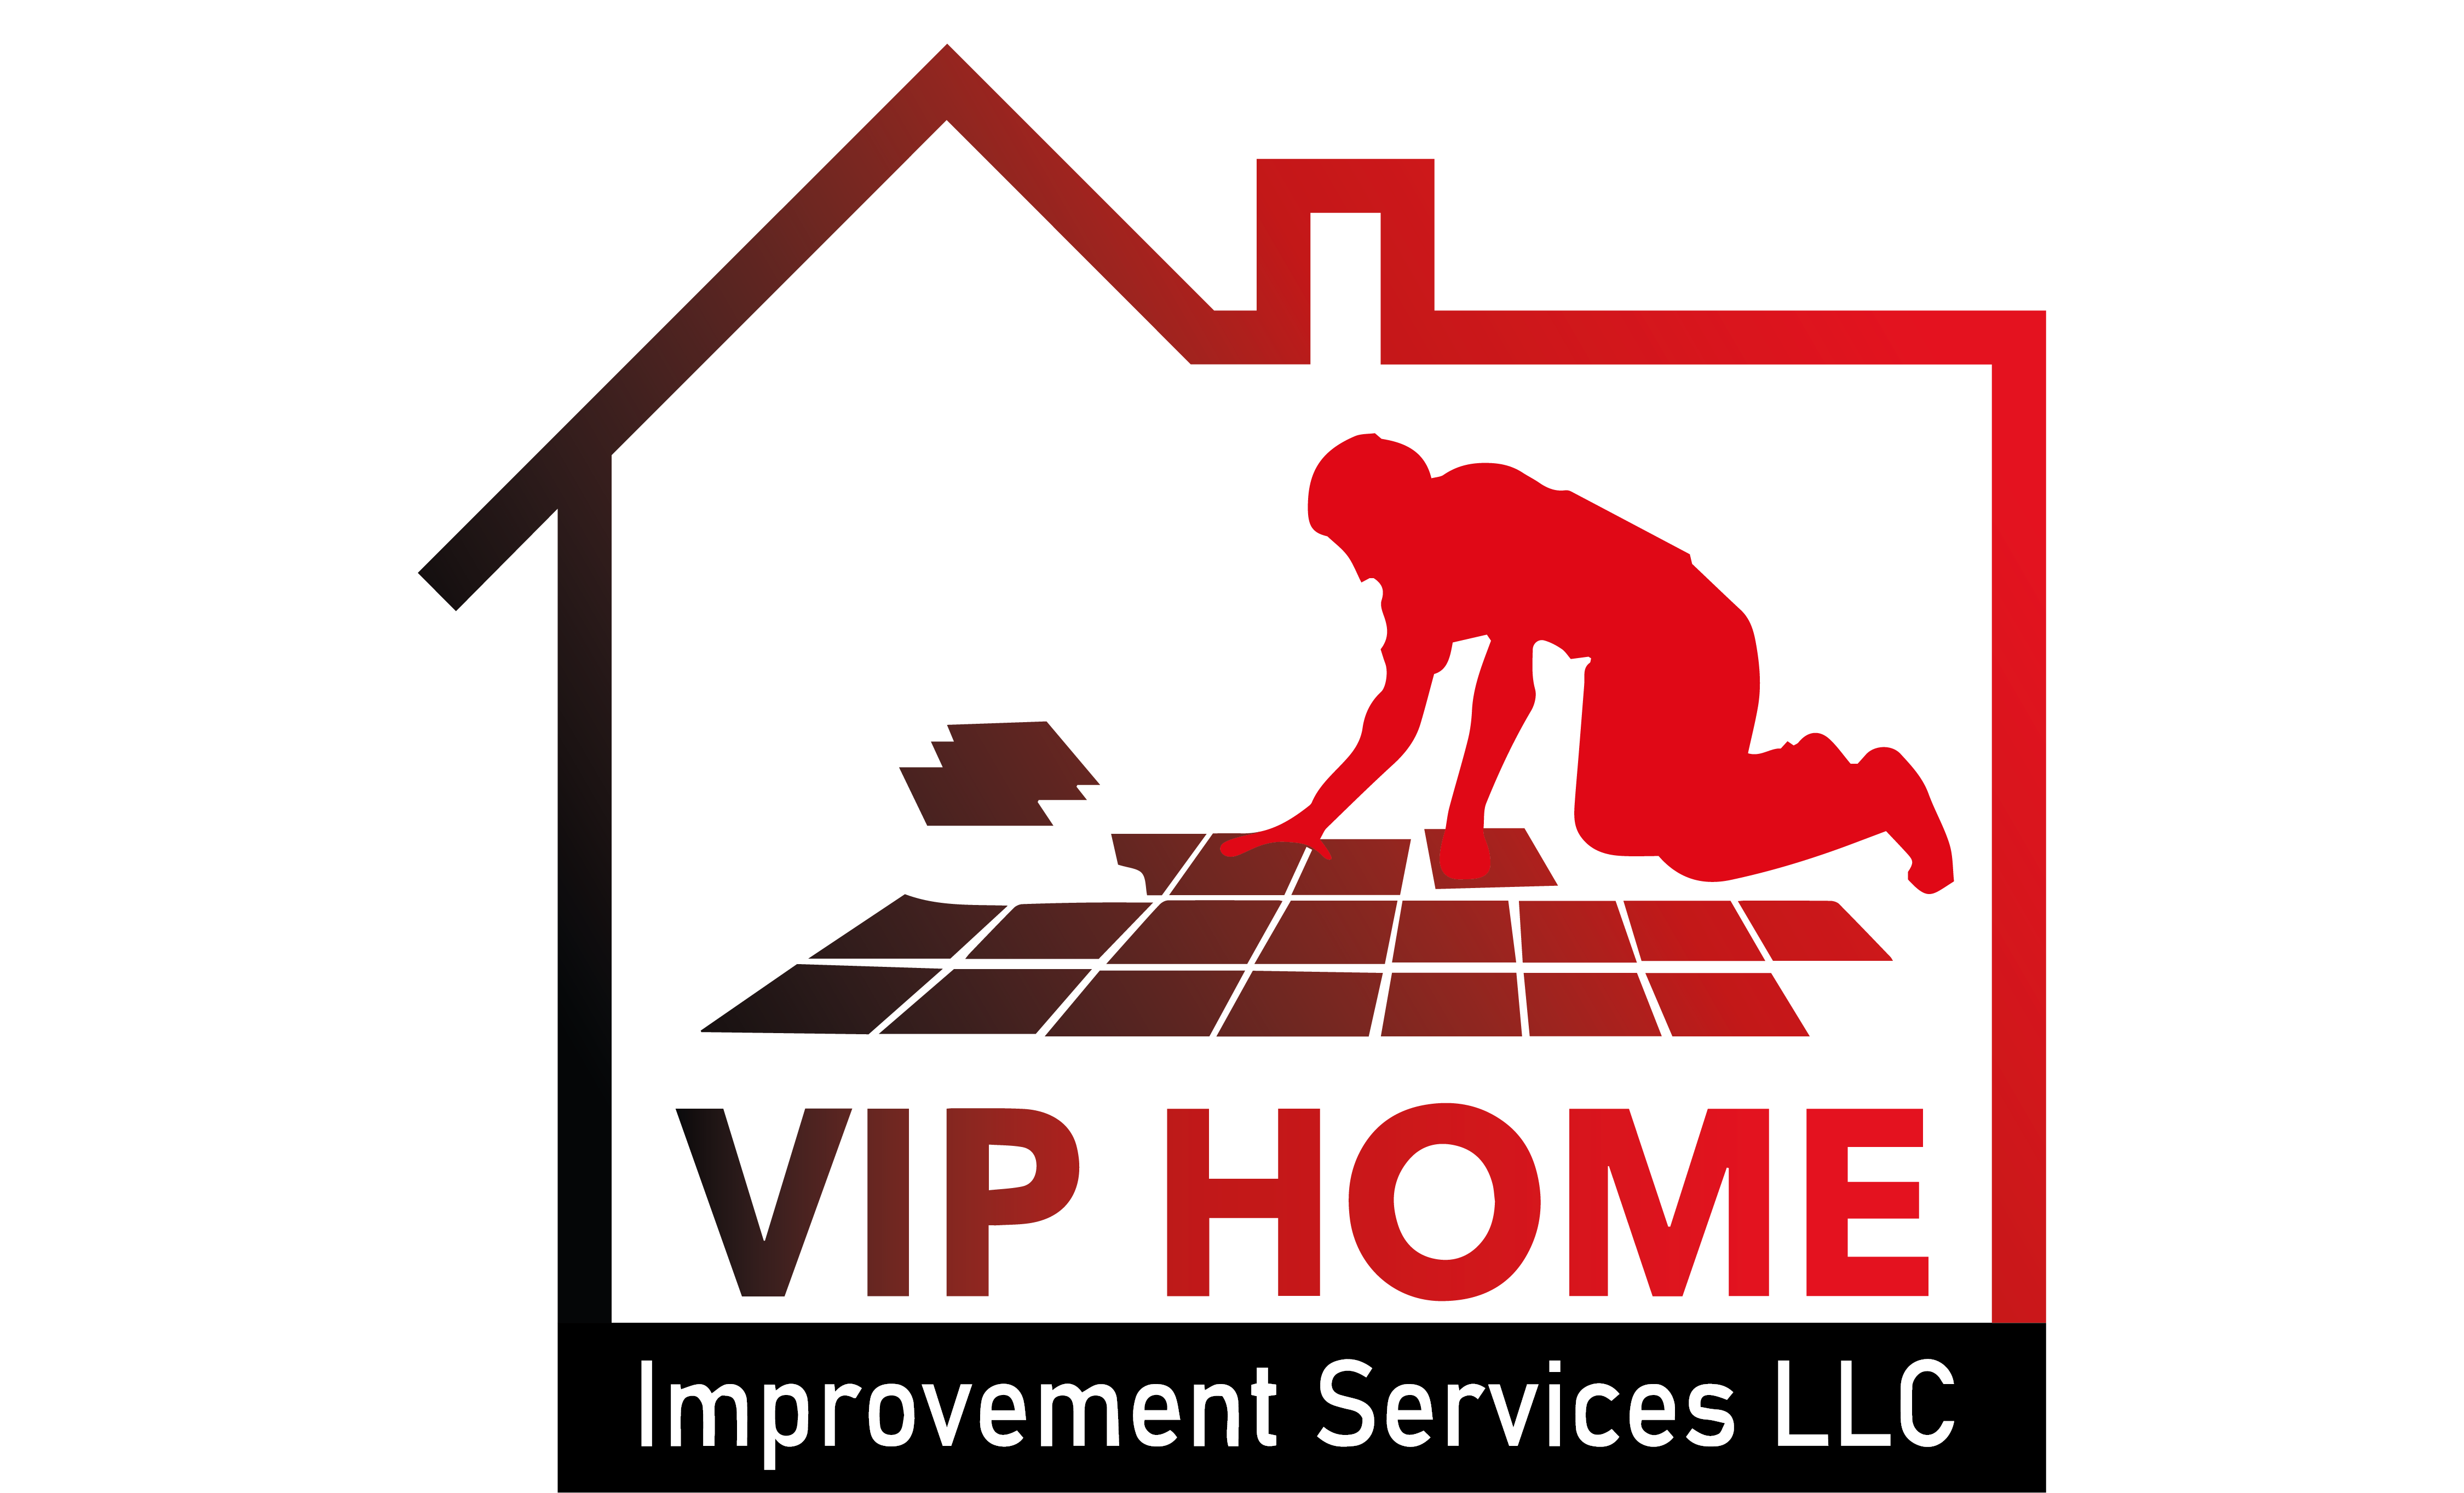 VIP Home Improvement Services LLC logo